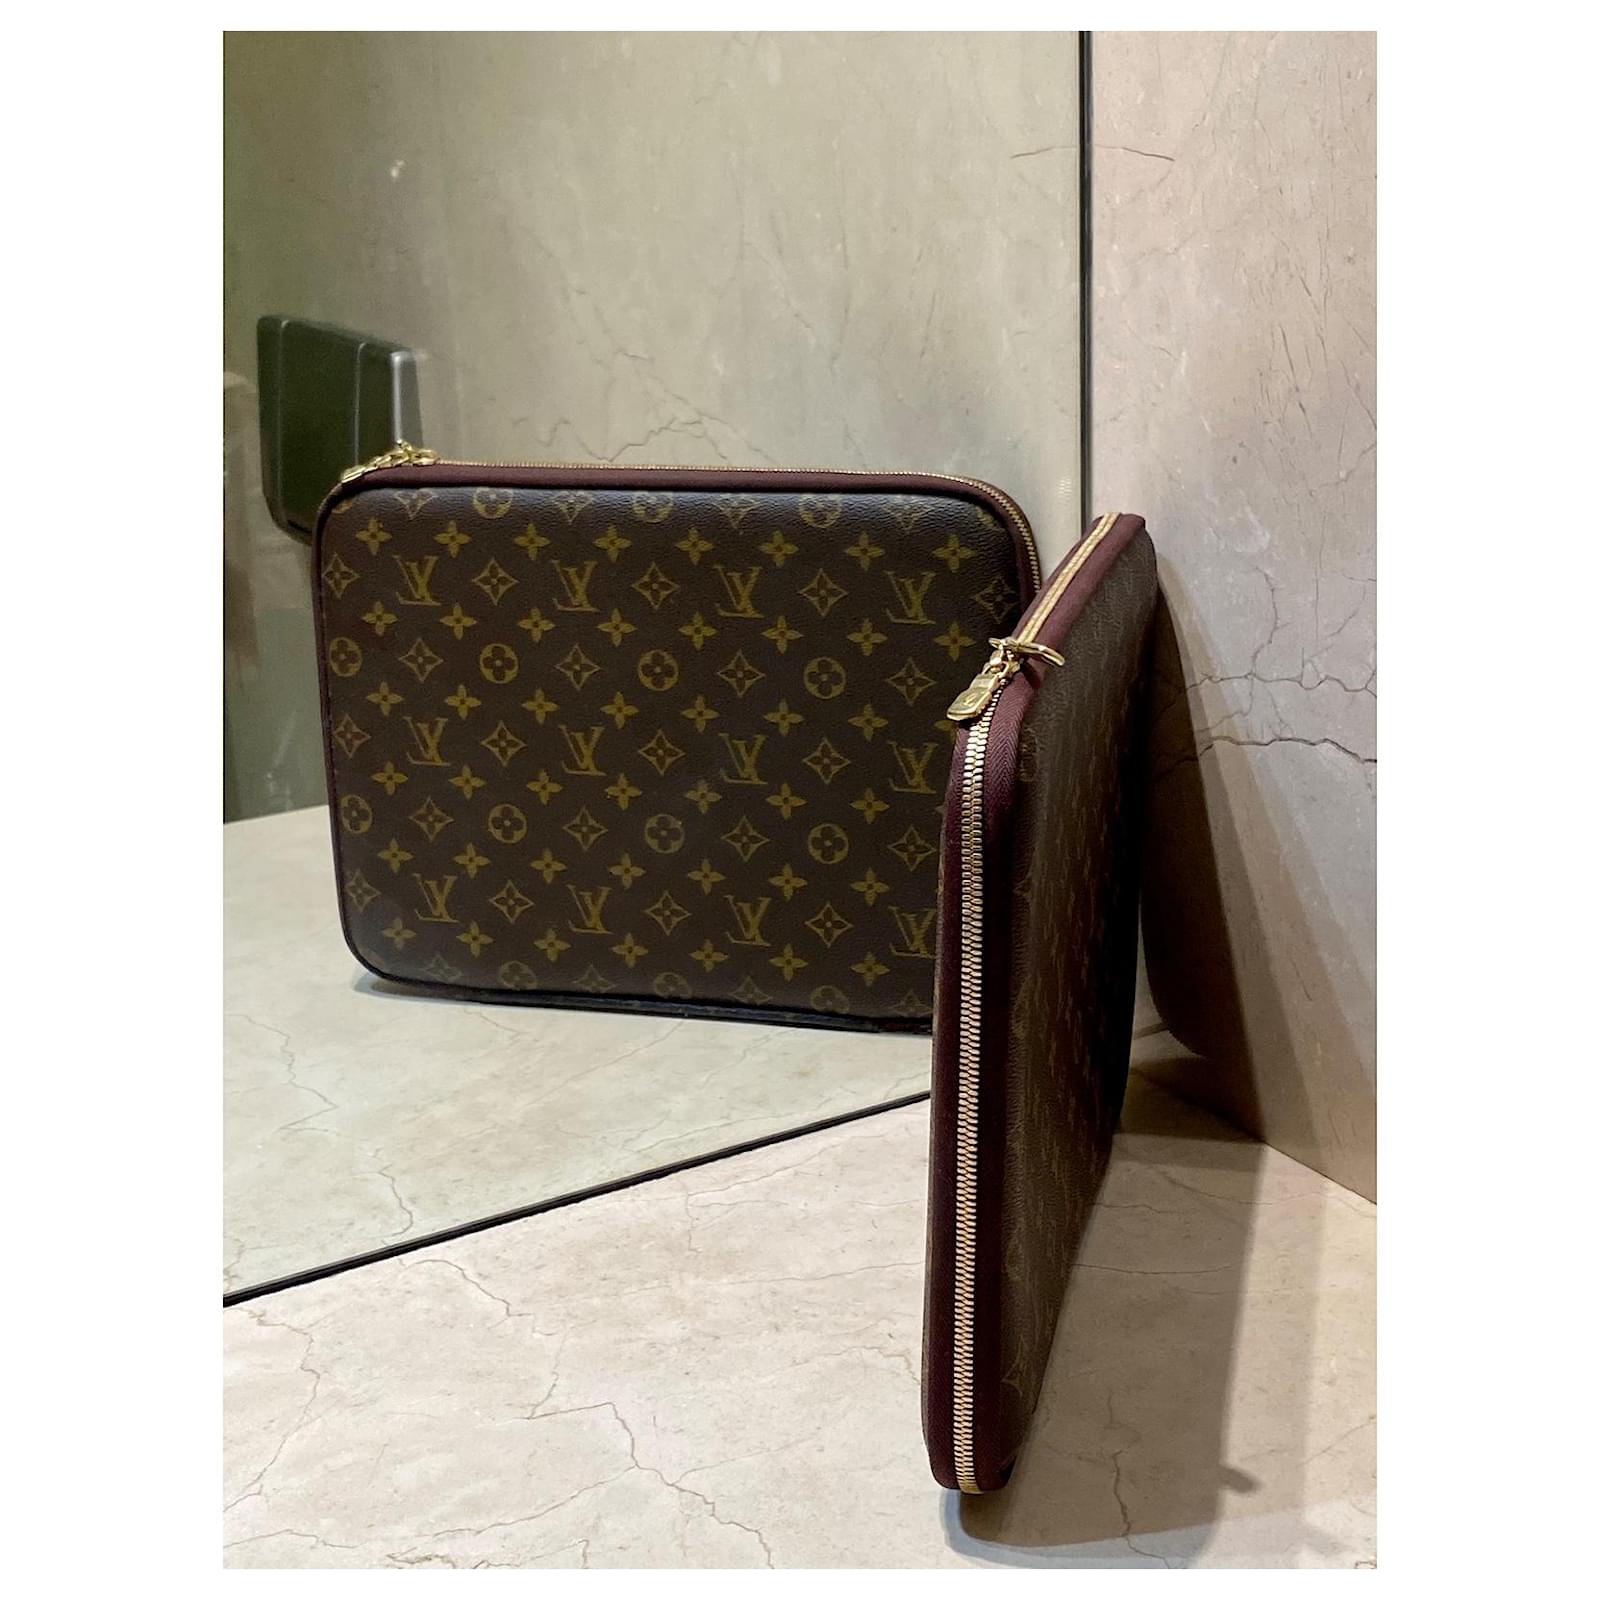 Louis Vuitton Monogram Laptop Zippered Sleeve/Case